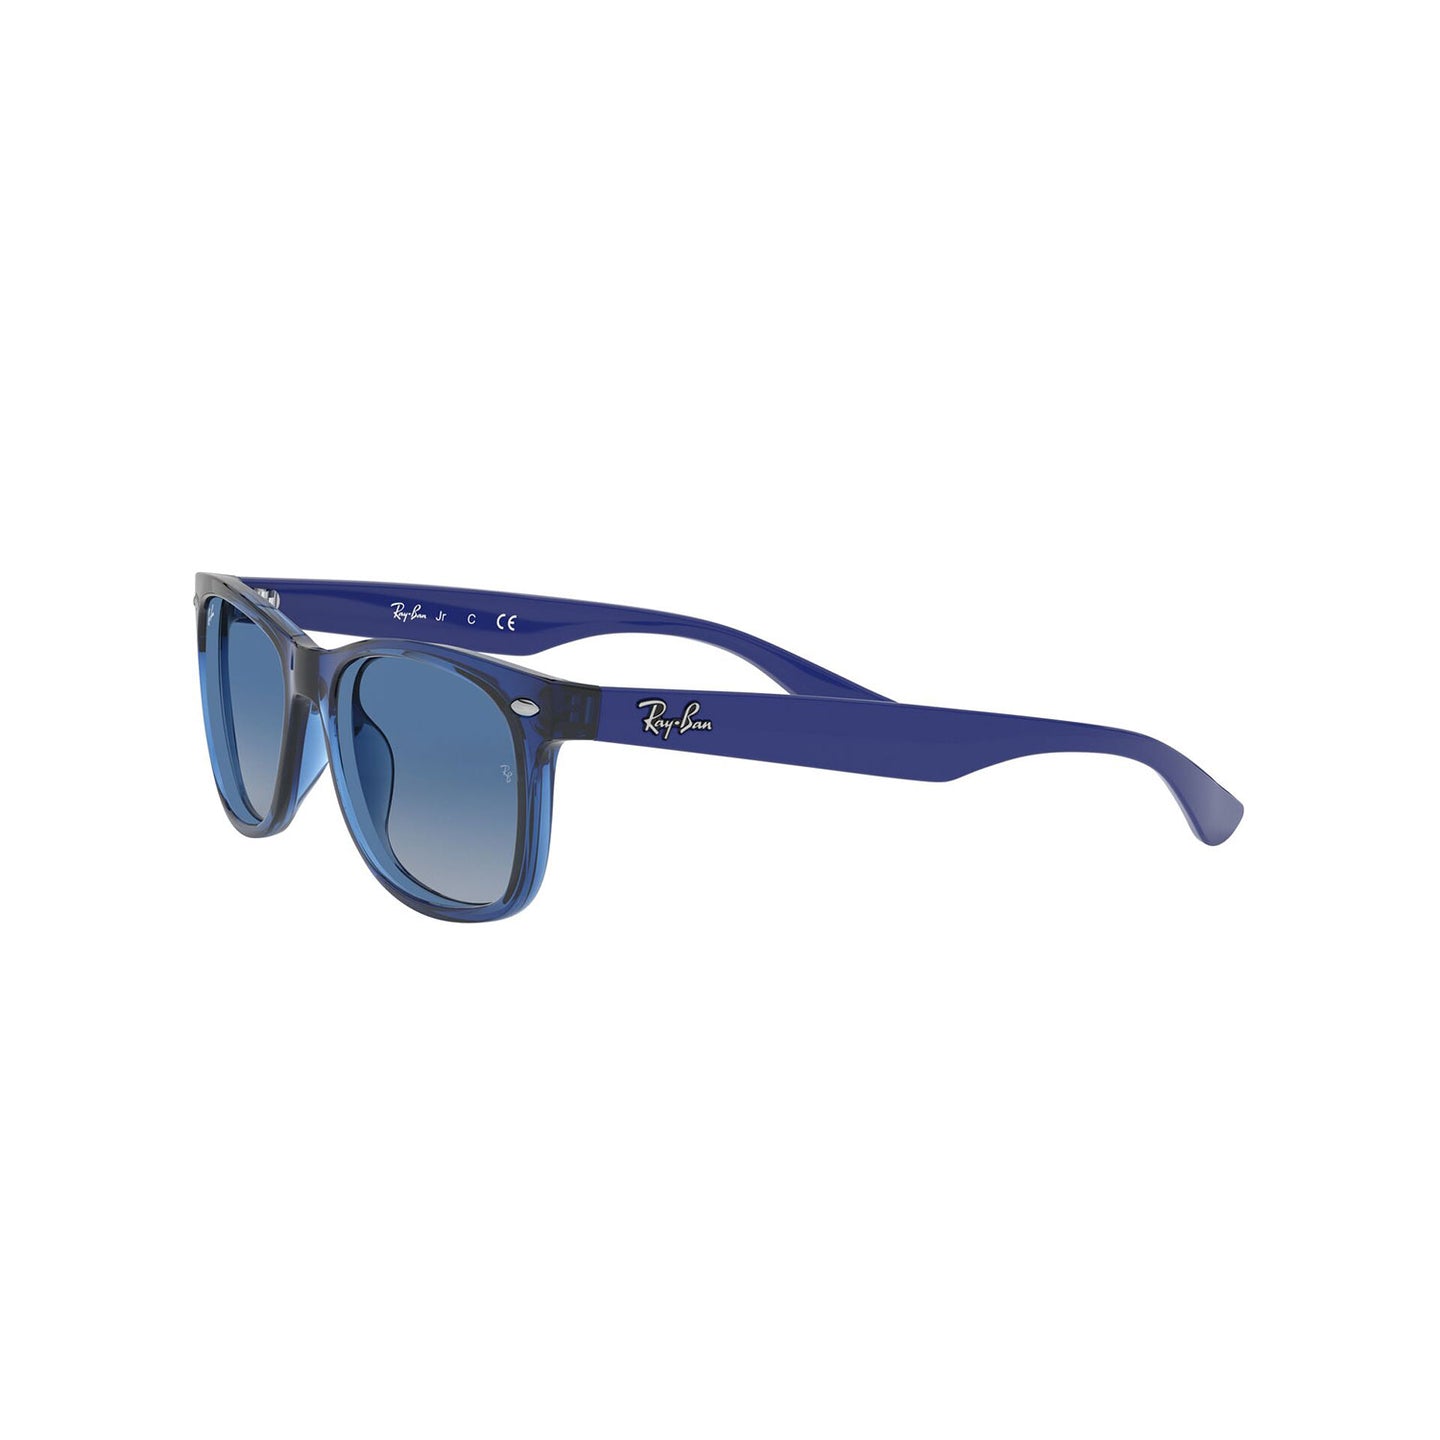 sunglasses ray ban model rj 9052s color  7062/4l